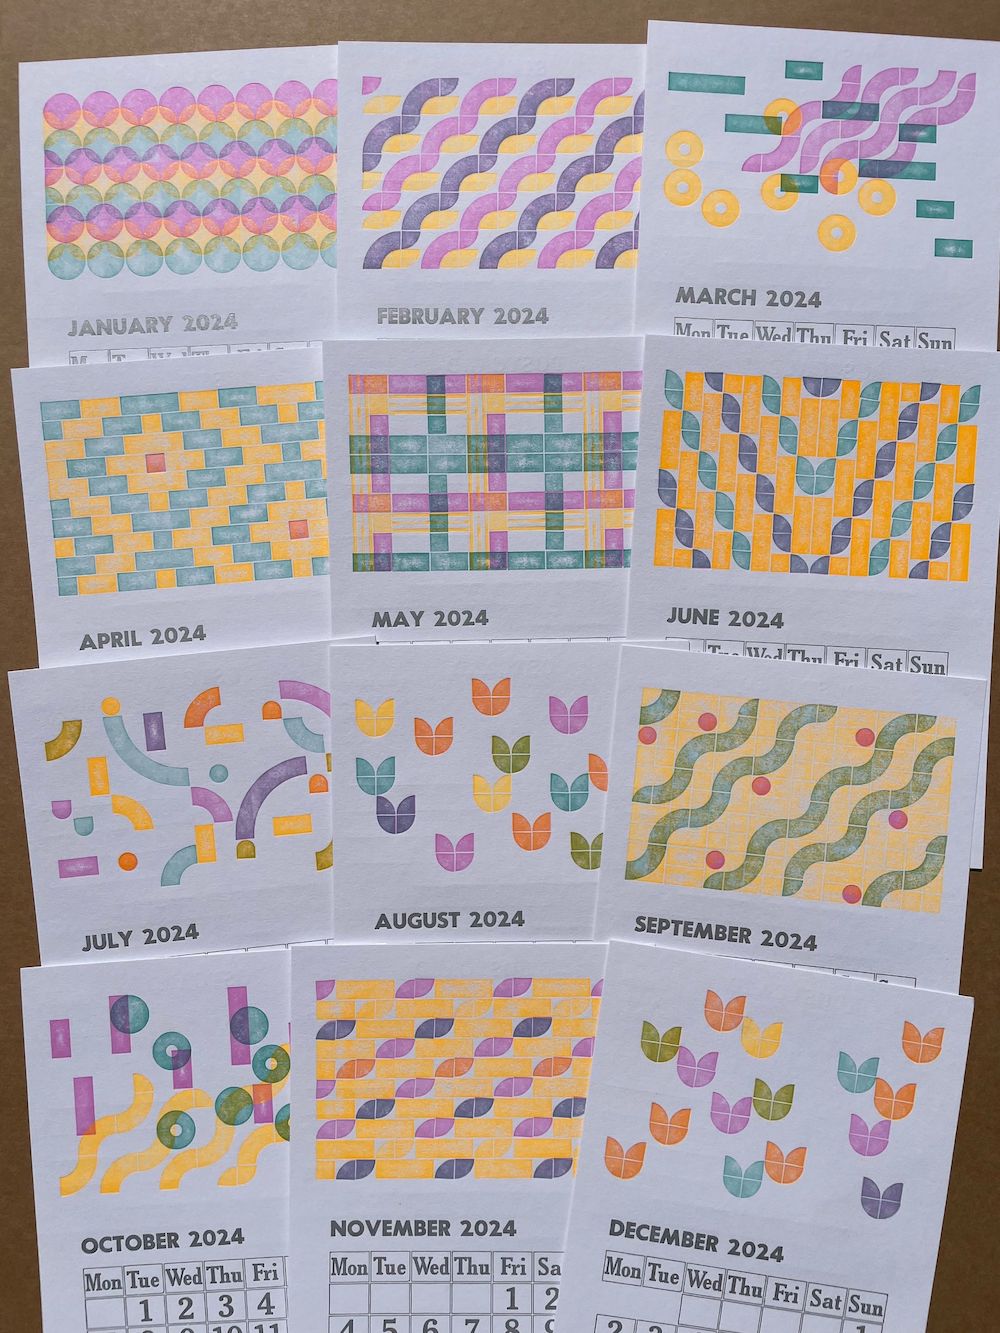 Display of all 12 calendar months' artwork